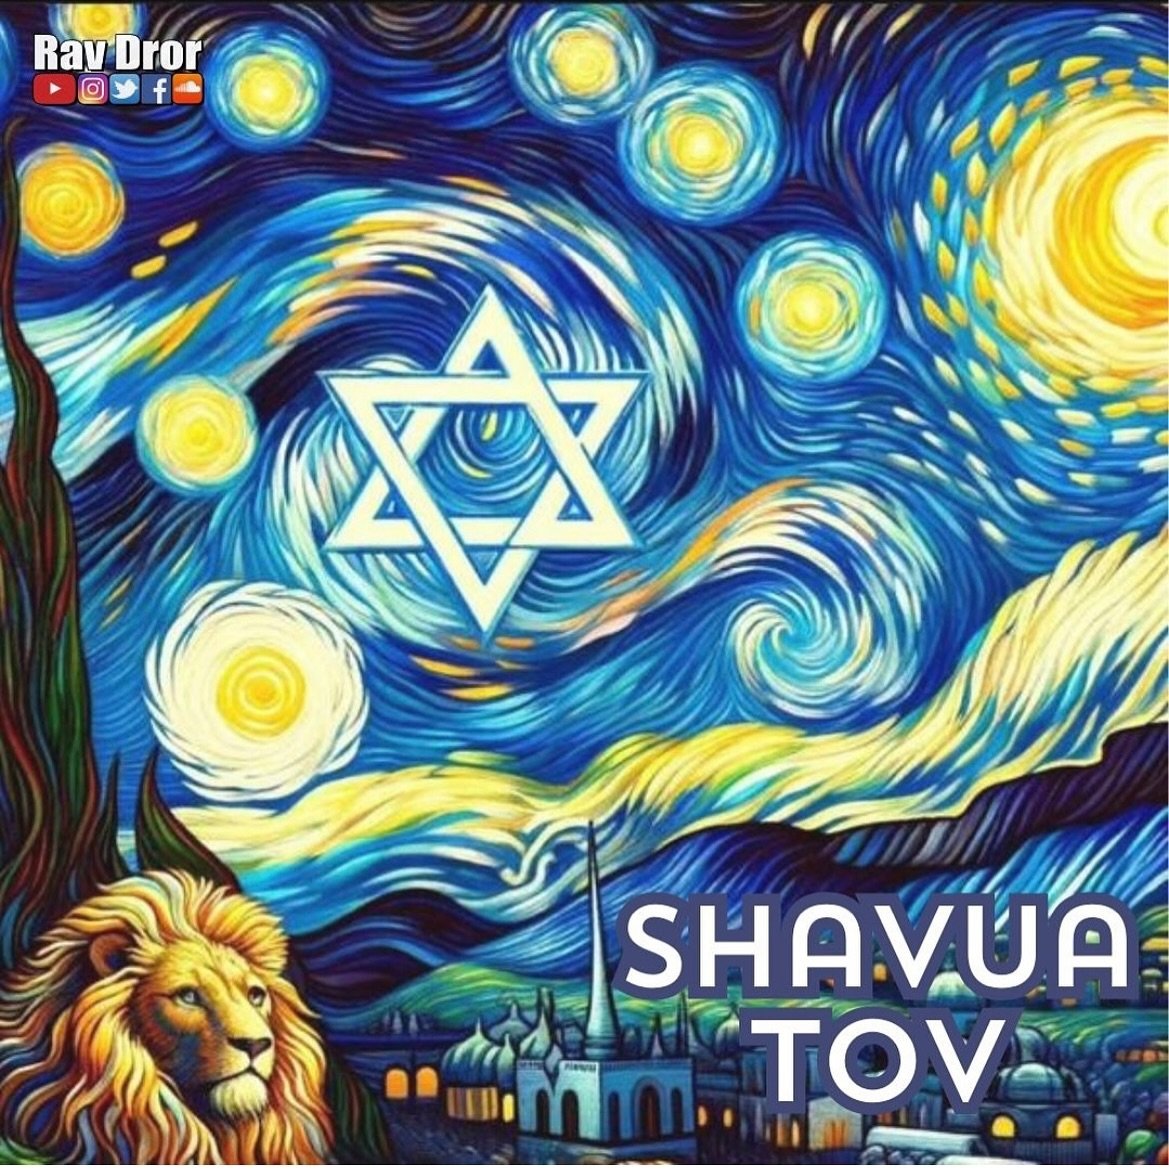 Shavua tov!🙏🏽 Wishing you an amazing week😊

📸 @israeliwatermelon 

#ravdror #emunah #shavuatov #jewishcommunity #israel